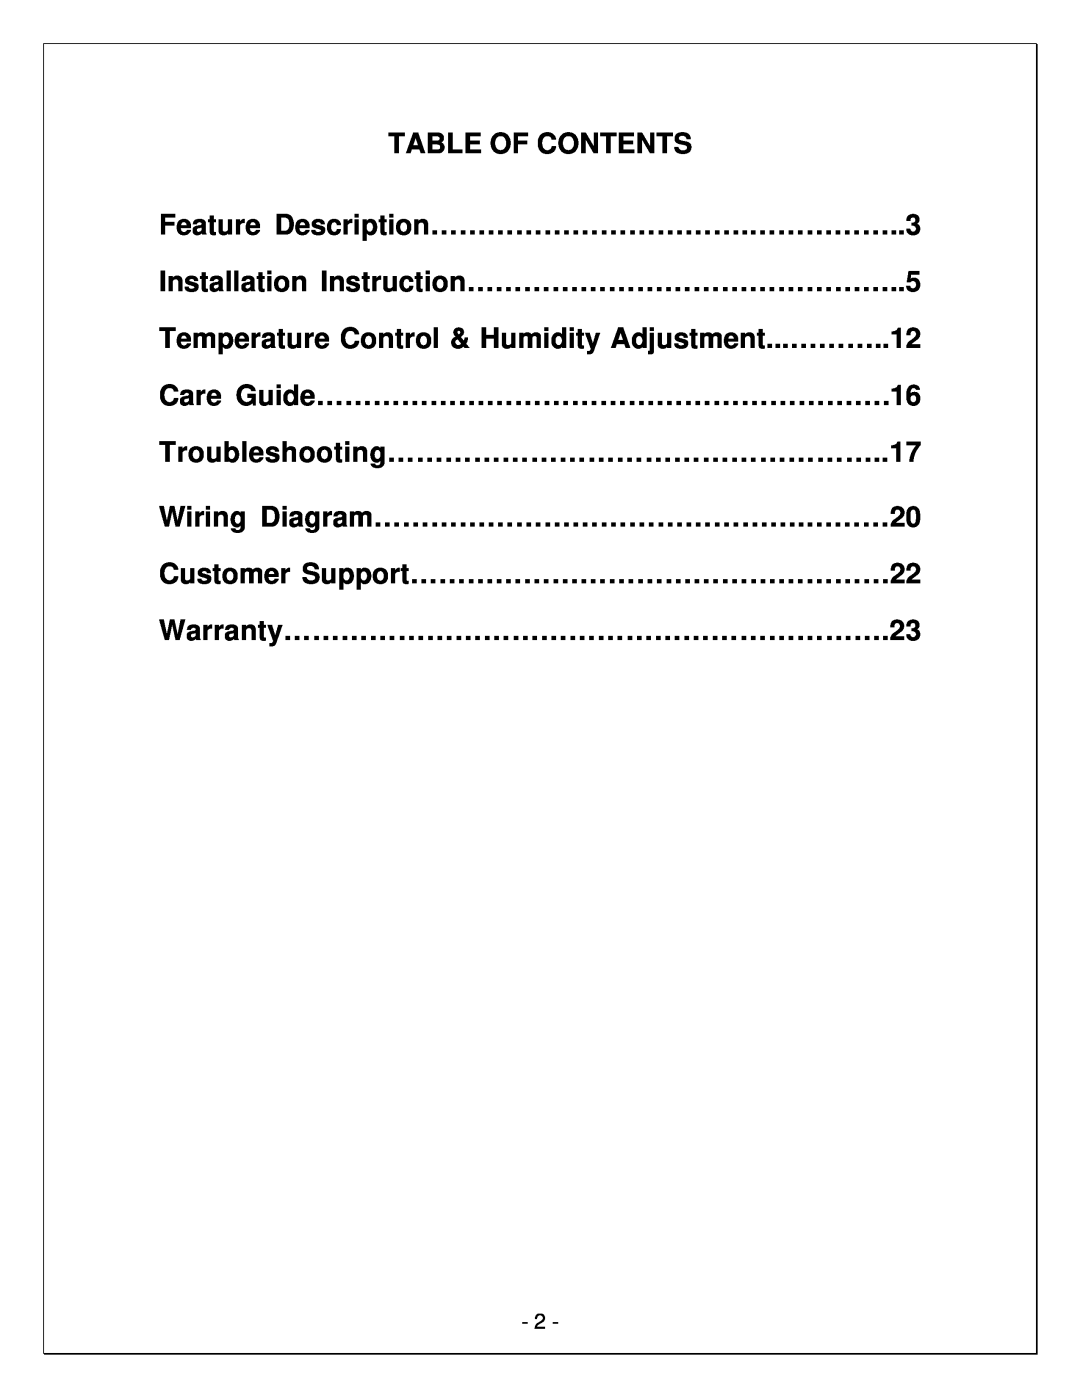 Vinotemp VINO6500HZD manual Table Of Contents, Feature Description…………………………….……………..3, Care Guide…………………………………………………….16 